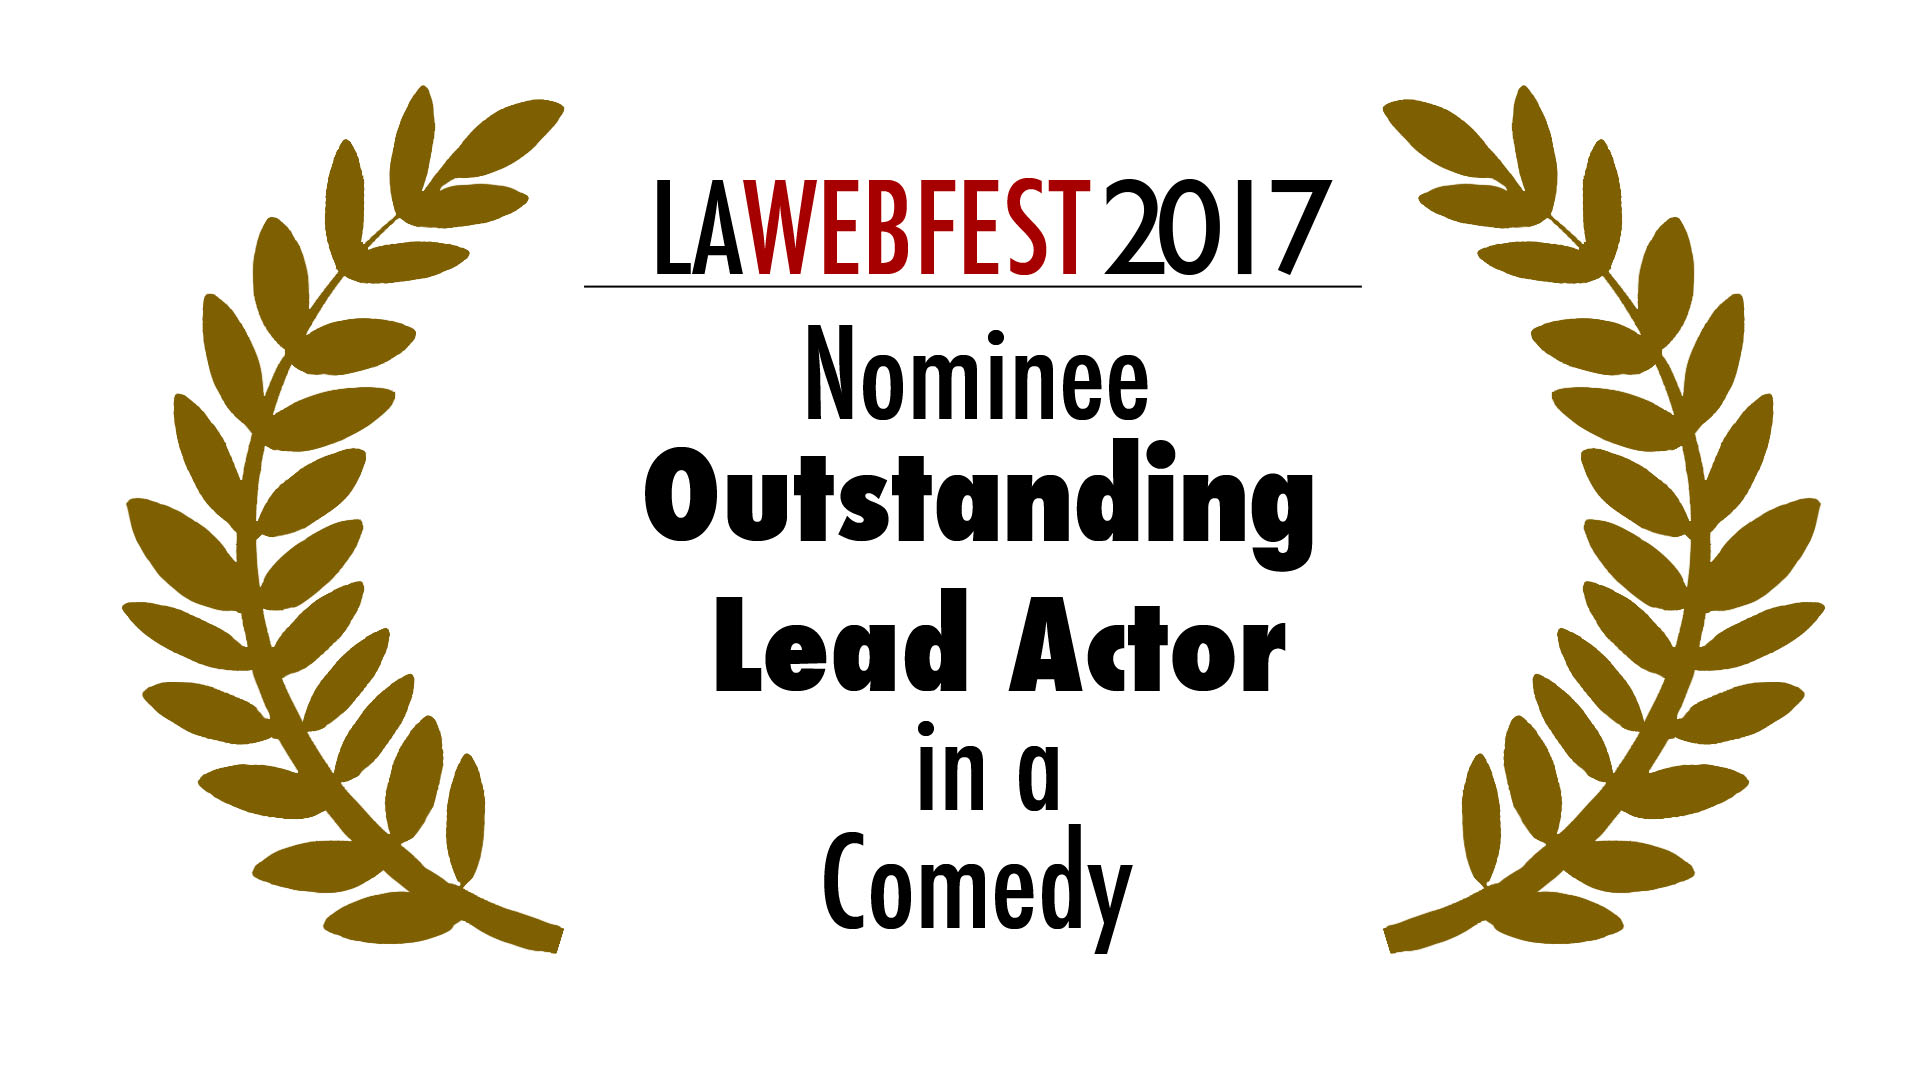 LA Webfest 2017 Lead Actor nominee